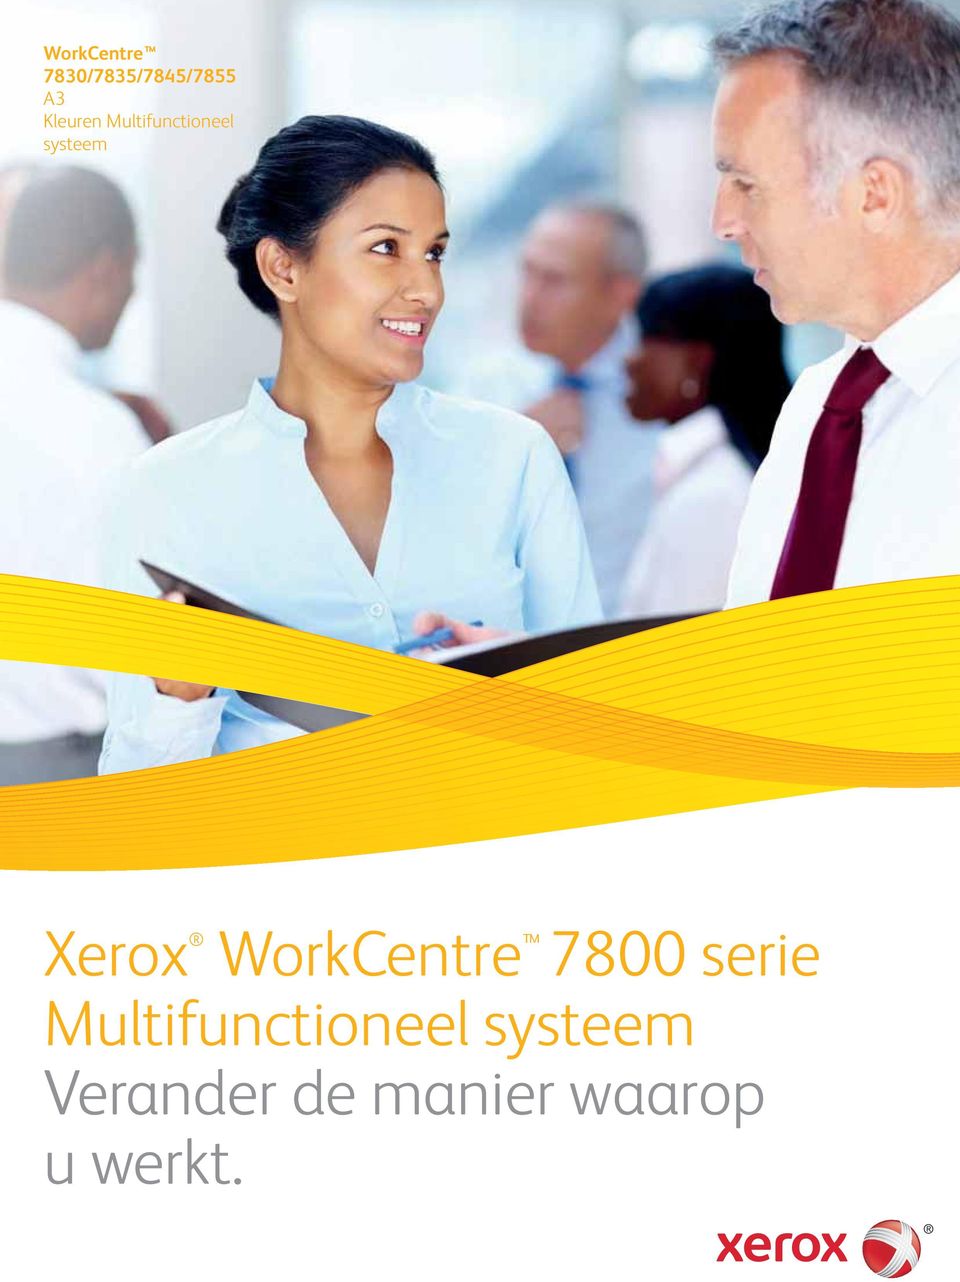 WorkCentre 7800 serie Multifunctioneel